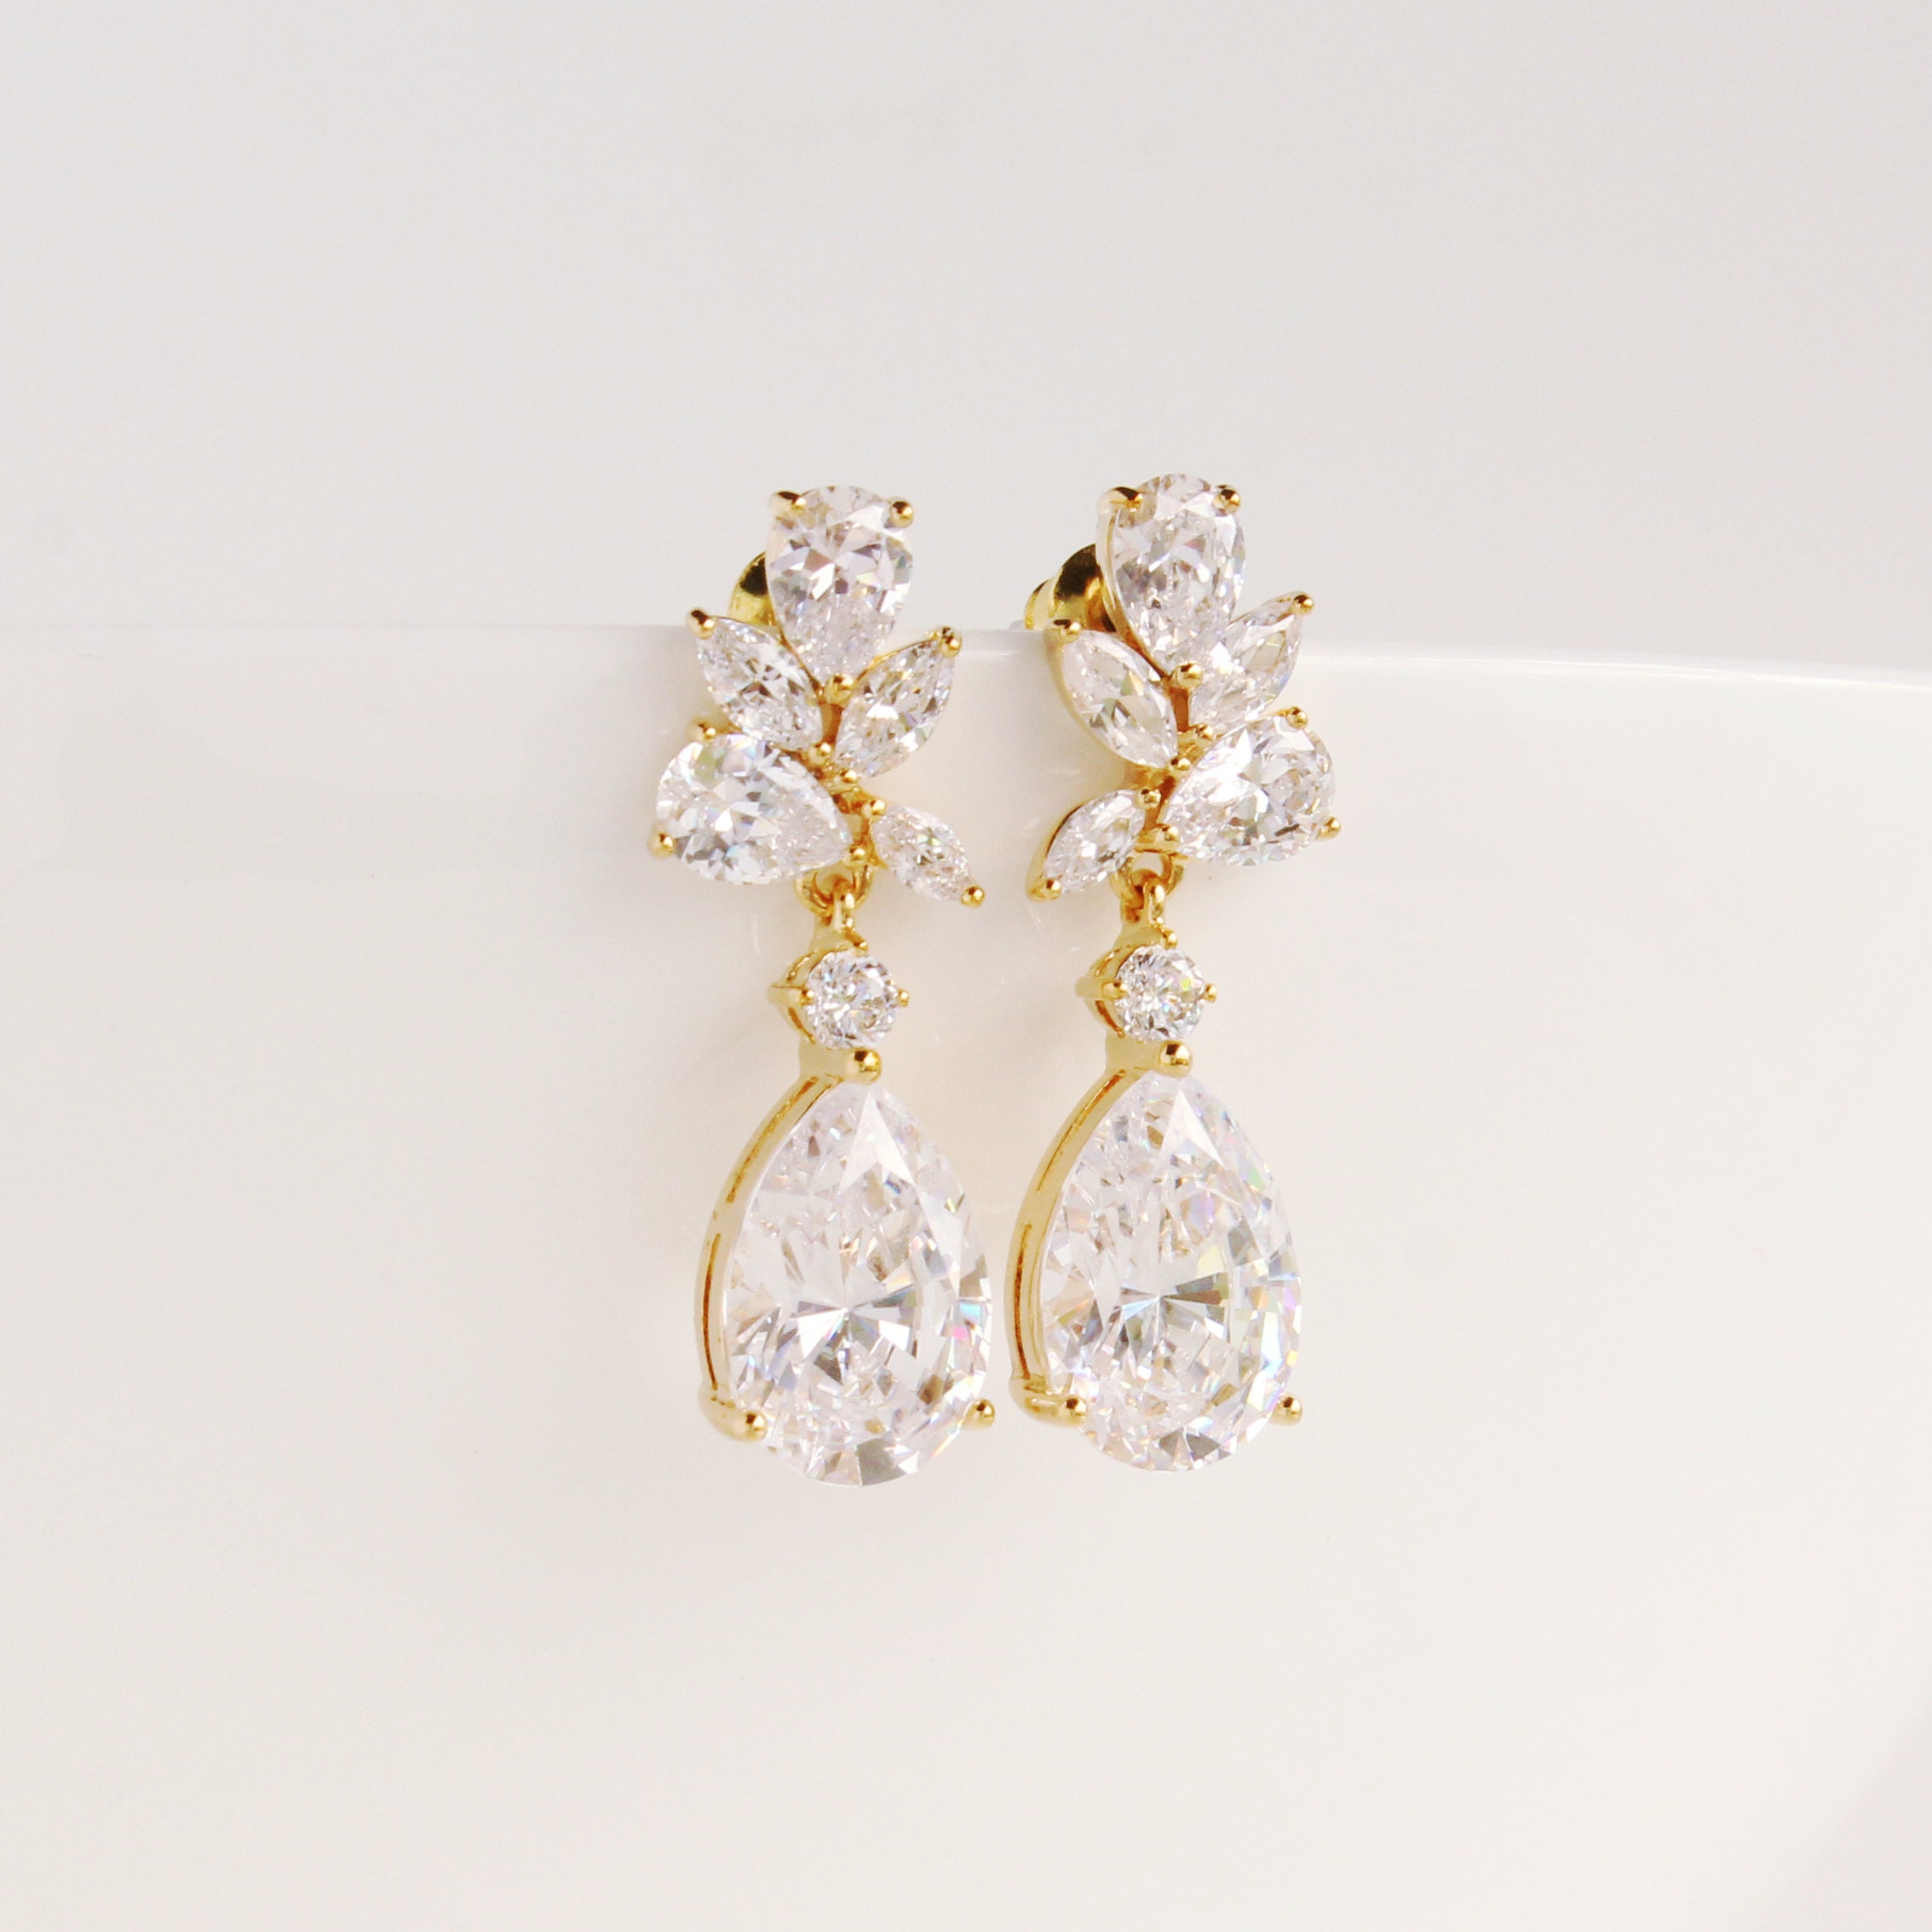 Crystal Bridal Earrings Marquise Cut & Swarovski Pear Shape | Etsy